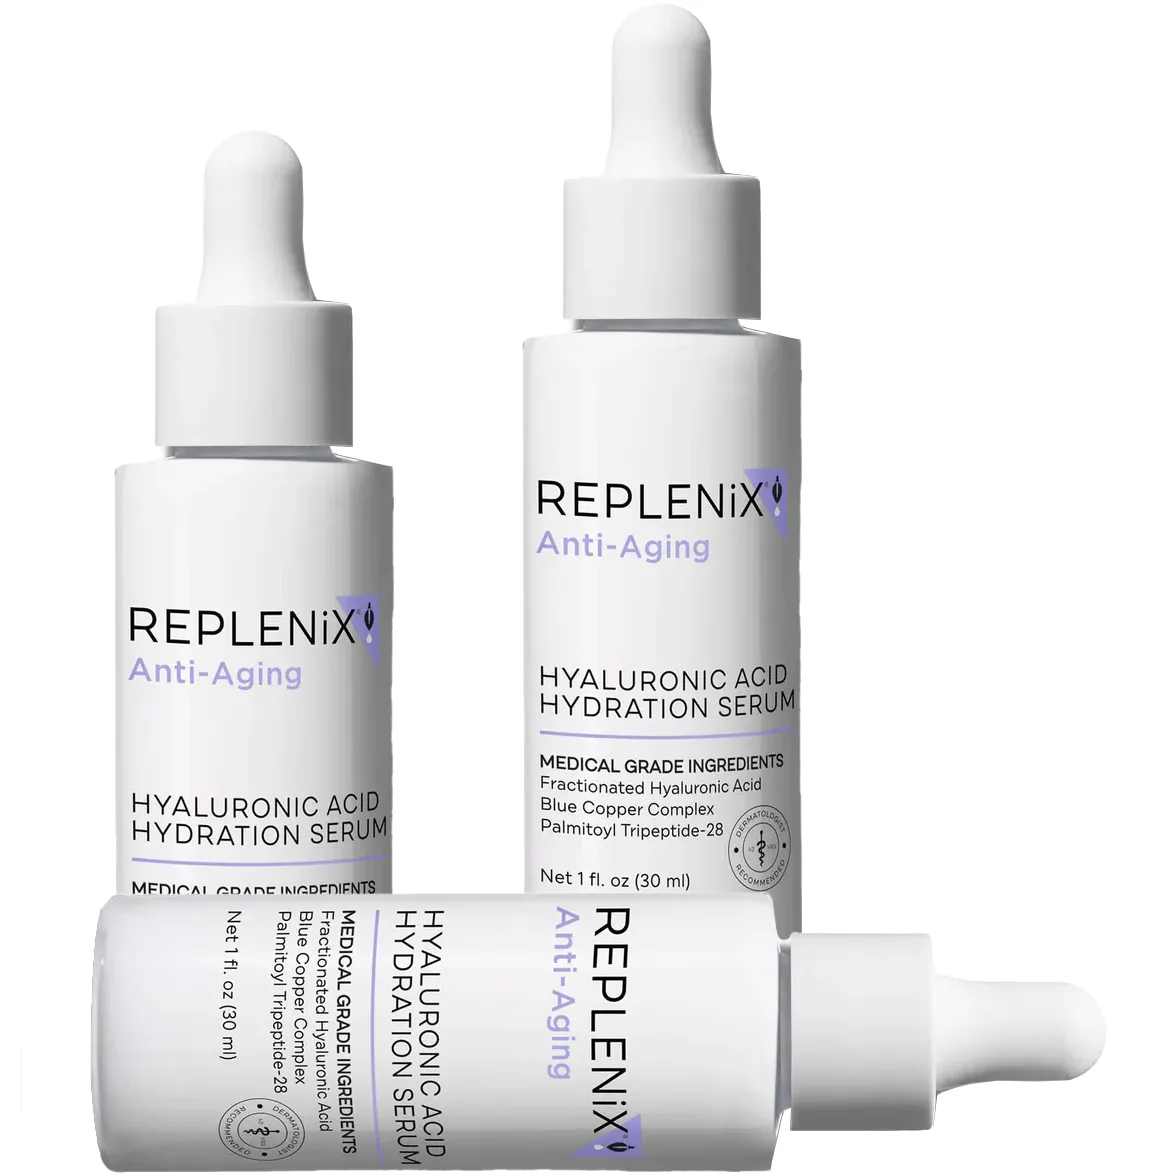 Free REPLENIX Hyaluronic Acid Hydration Serum